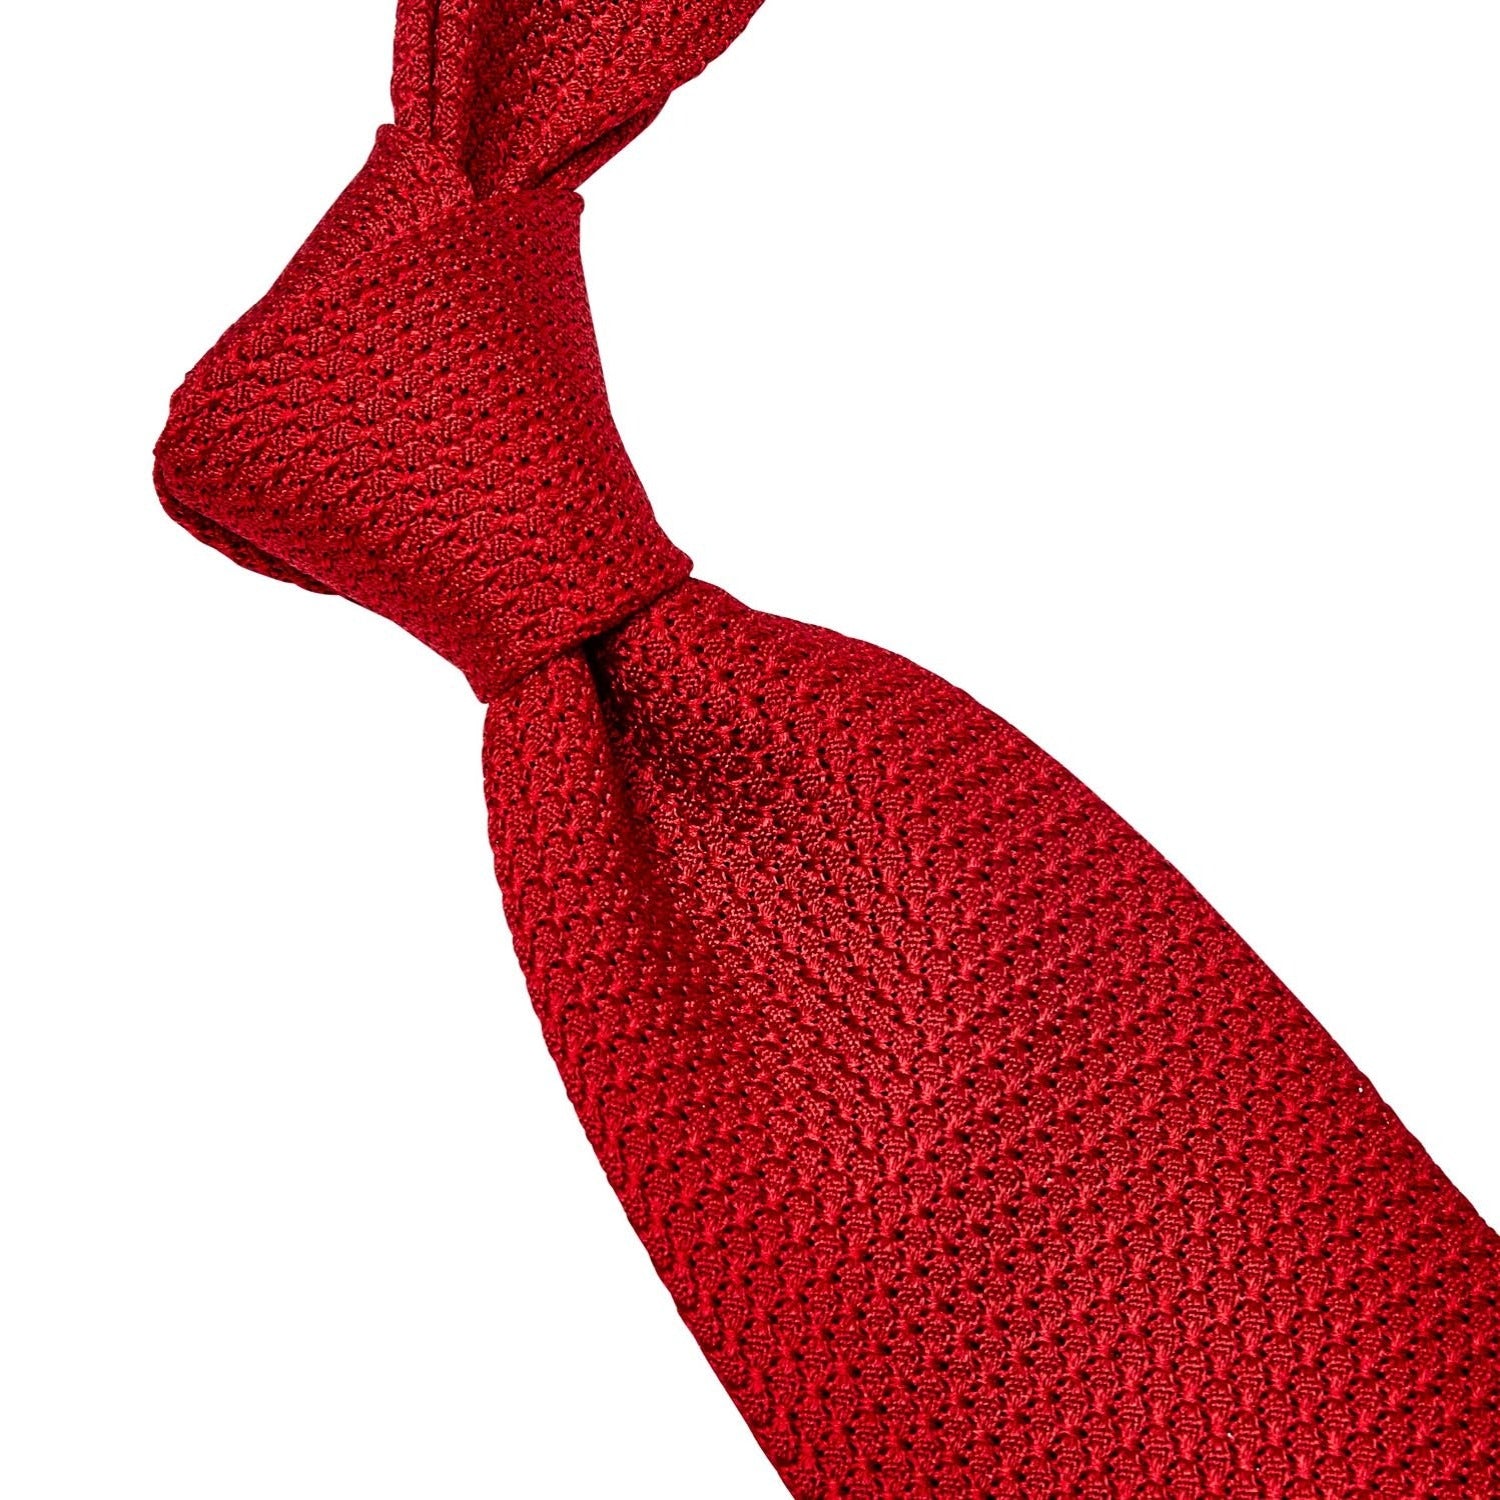 A handmade Sovereign Grade Grenadine Grossa Red Tie from KirbyAllison.com, on a white background.